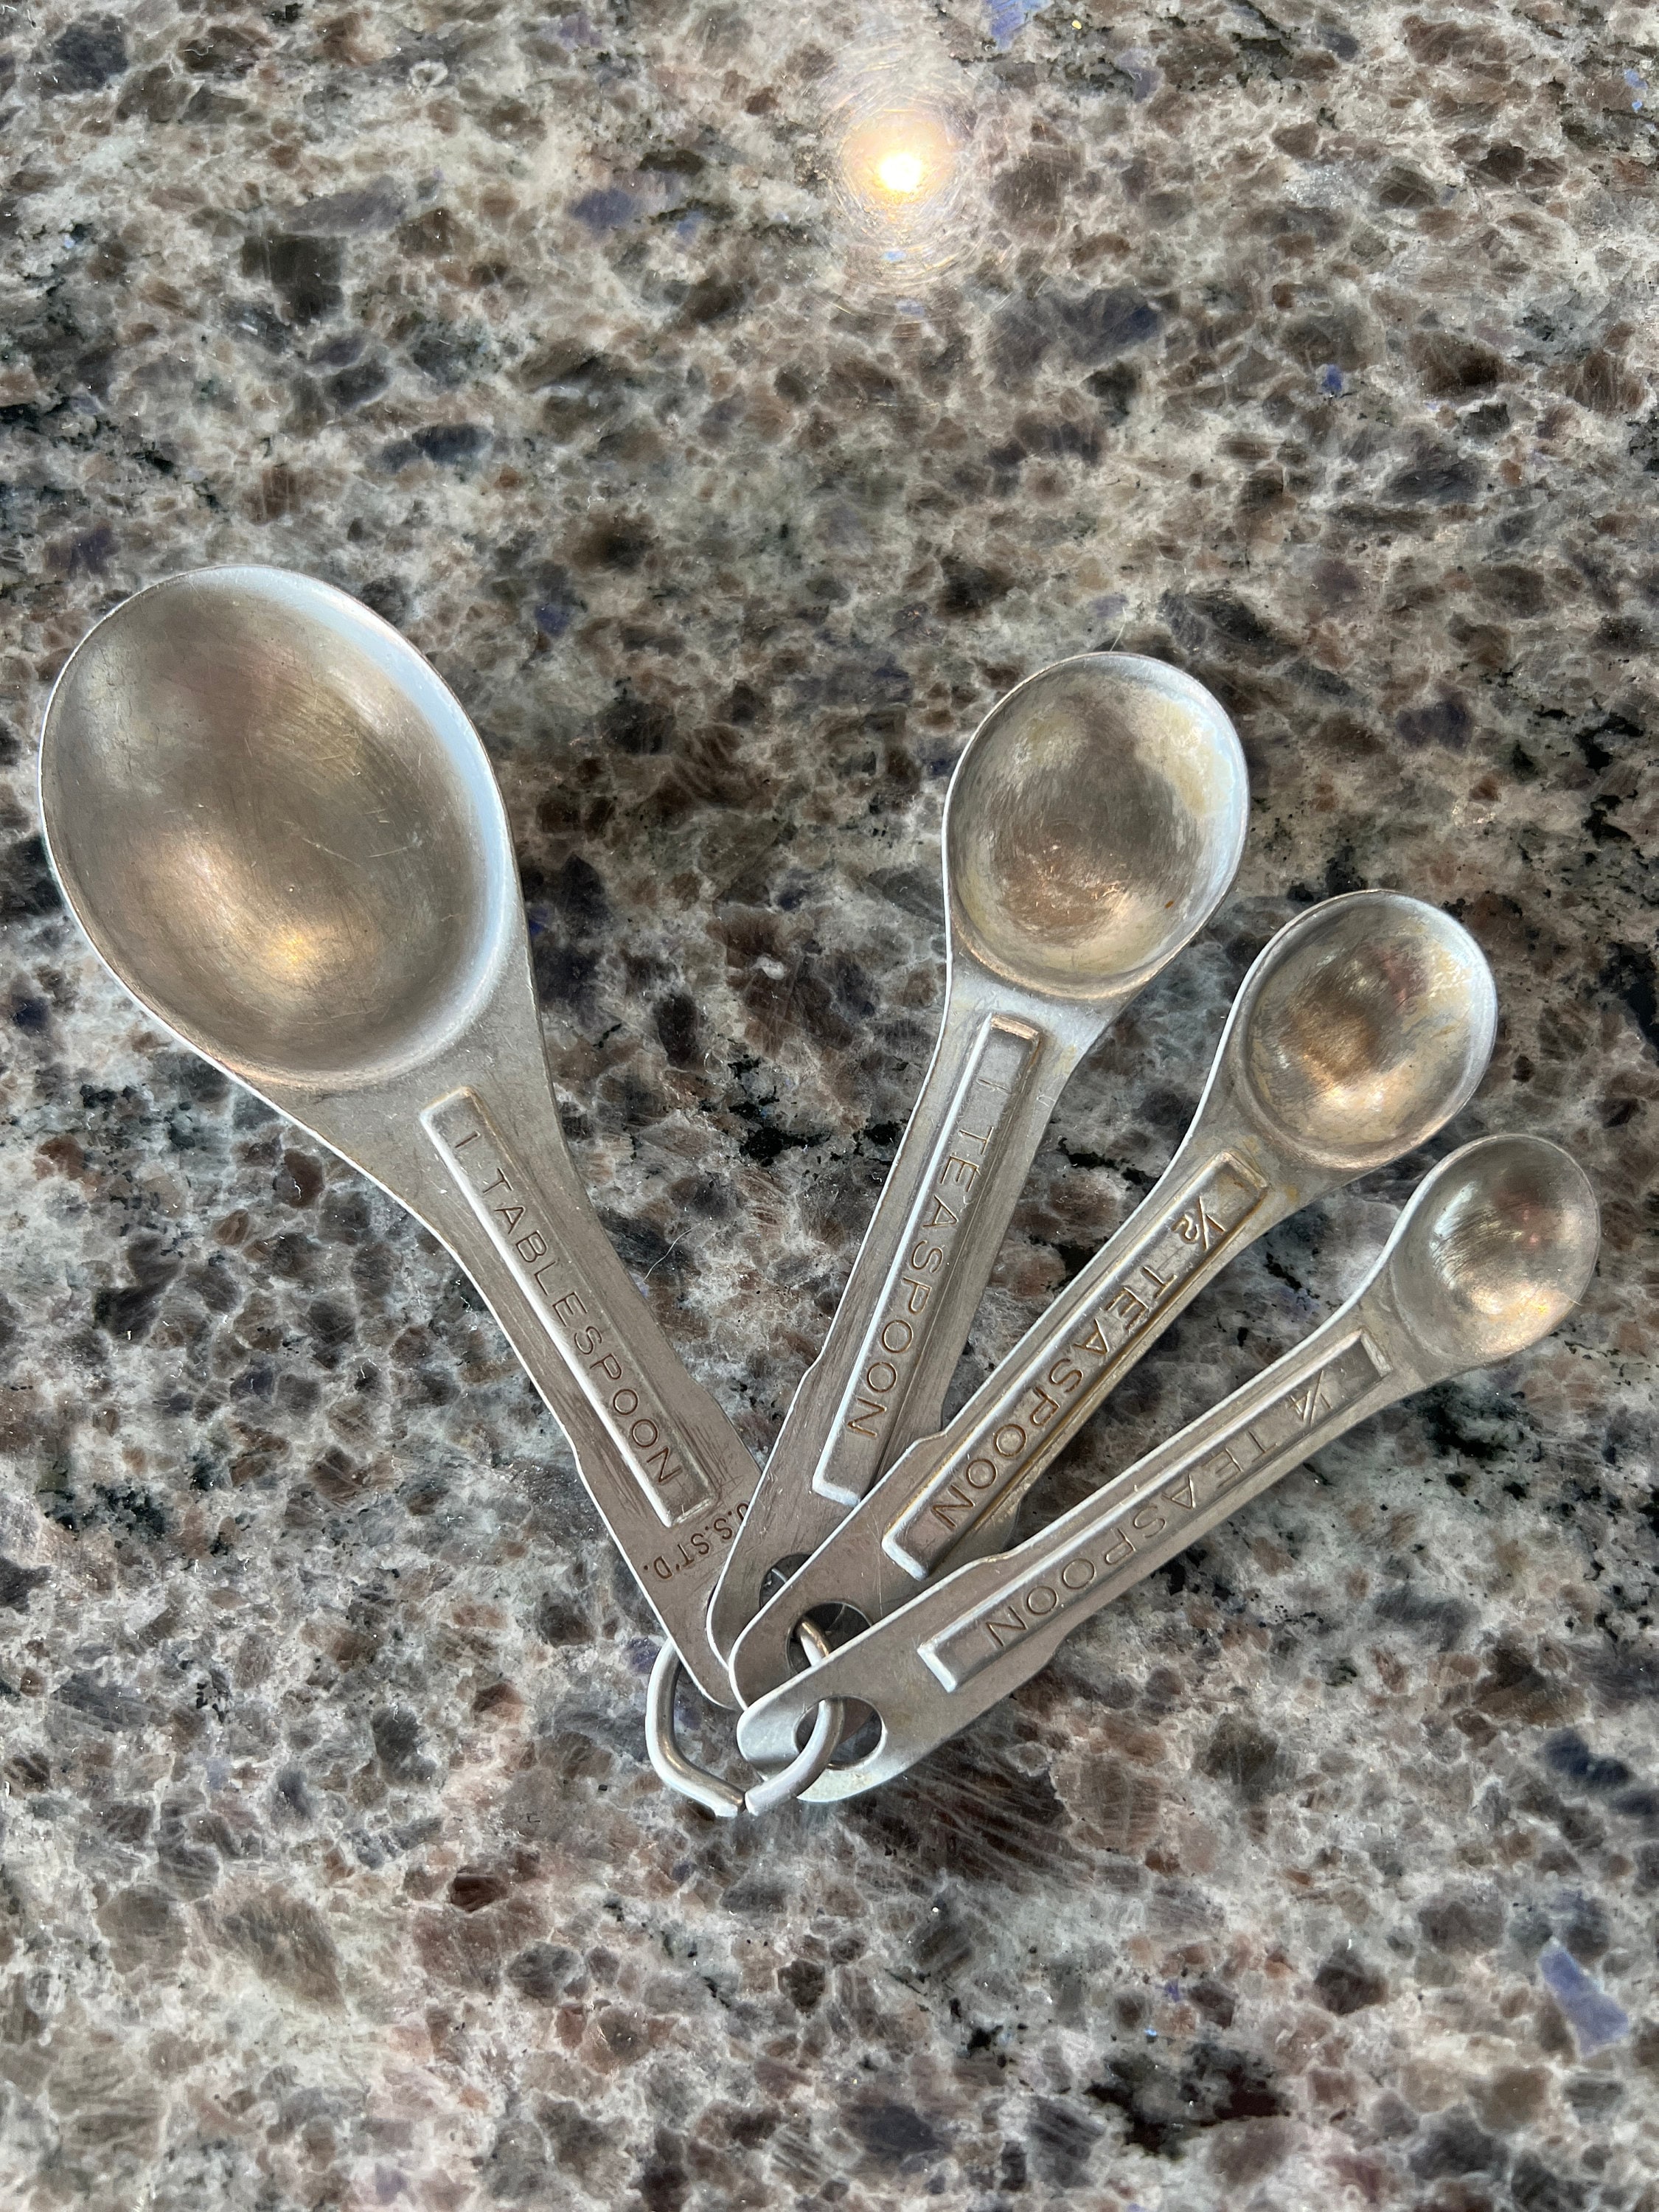 4pc Nesting Stainless Steel Measuring Spoon Set - 1/4 Teaspoon to 1  Tablespoon